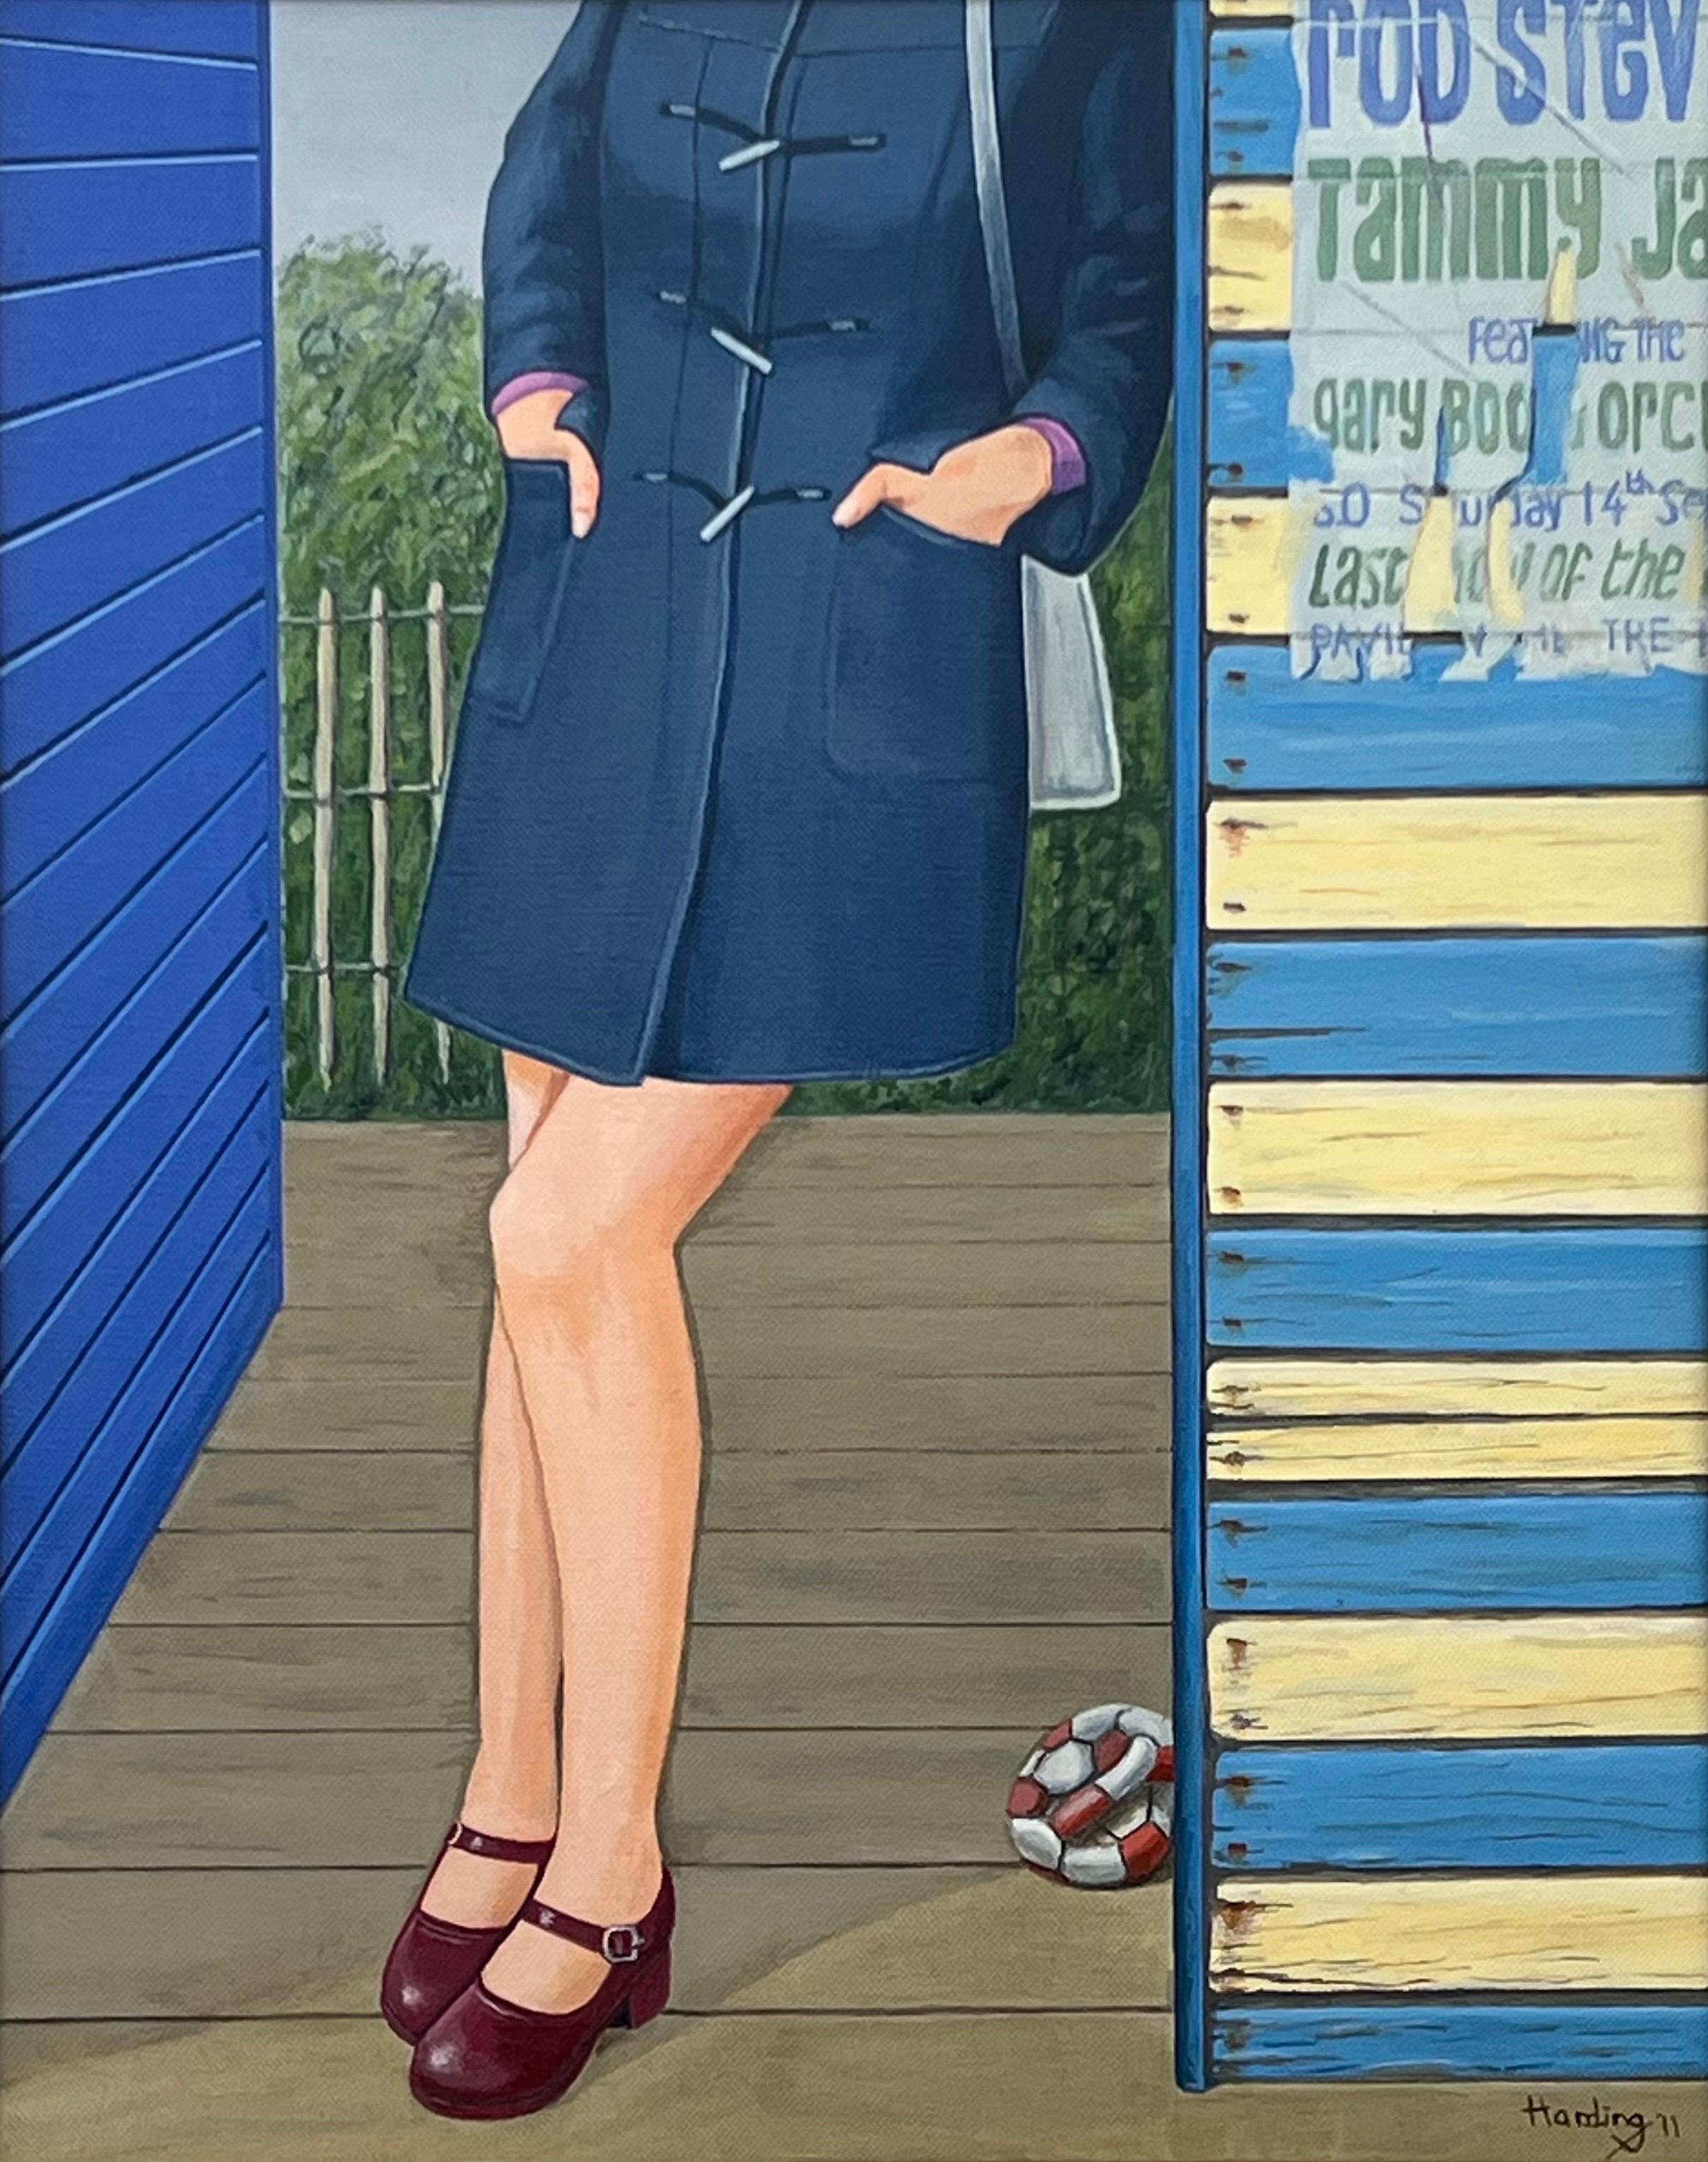 Vintage English Woman with Duffel Coat & Mary Jane Shoes 1960's 1970's England entitled 'The Fall of Desire' by Retro Nostalgic Artist, Paul F Harding. Signiert, Original, Öl auf Leinwand. Präsentiert in einem goldenen Rahmen.

Kunst misst 16 x 20